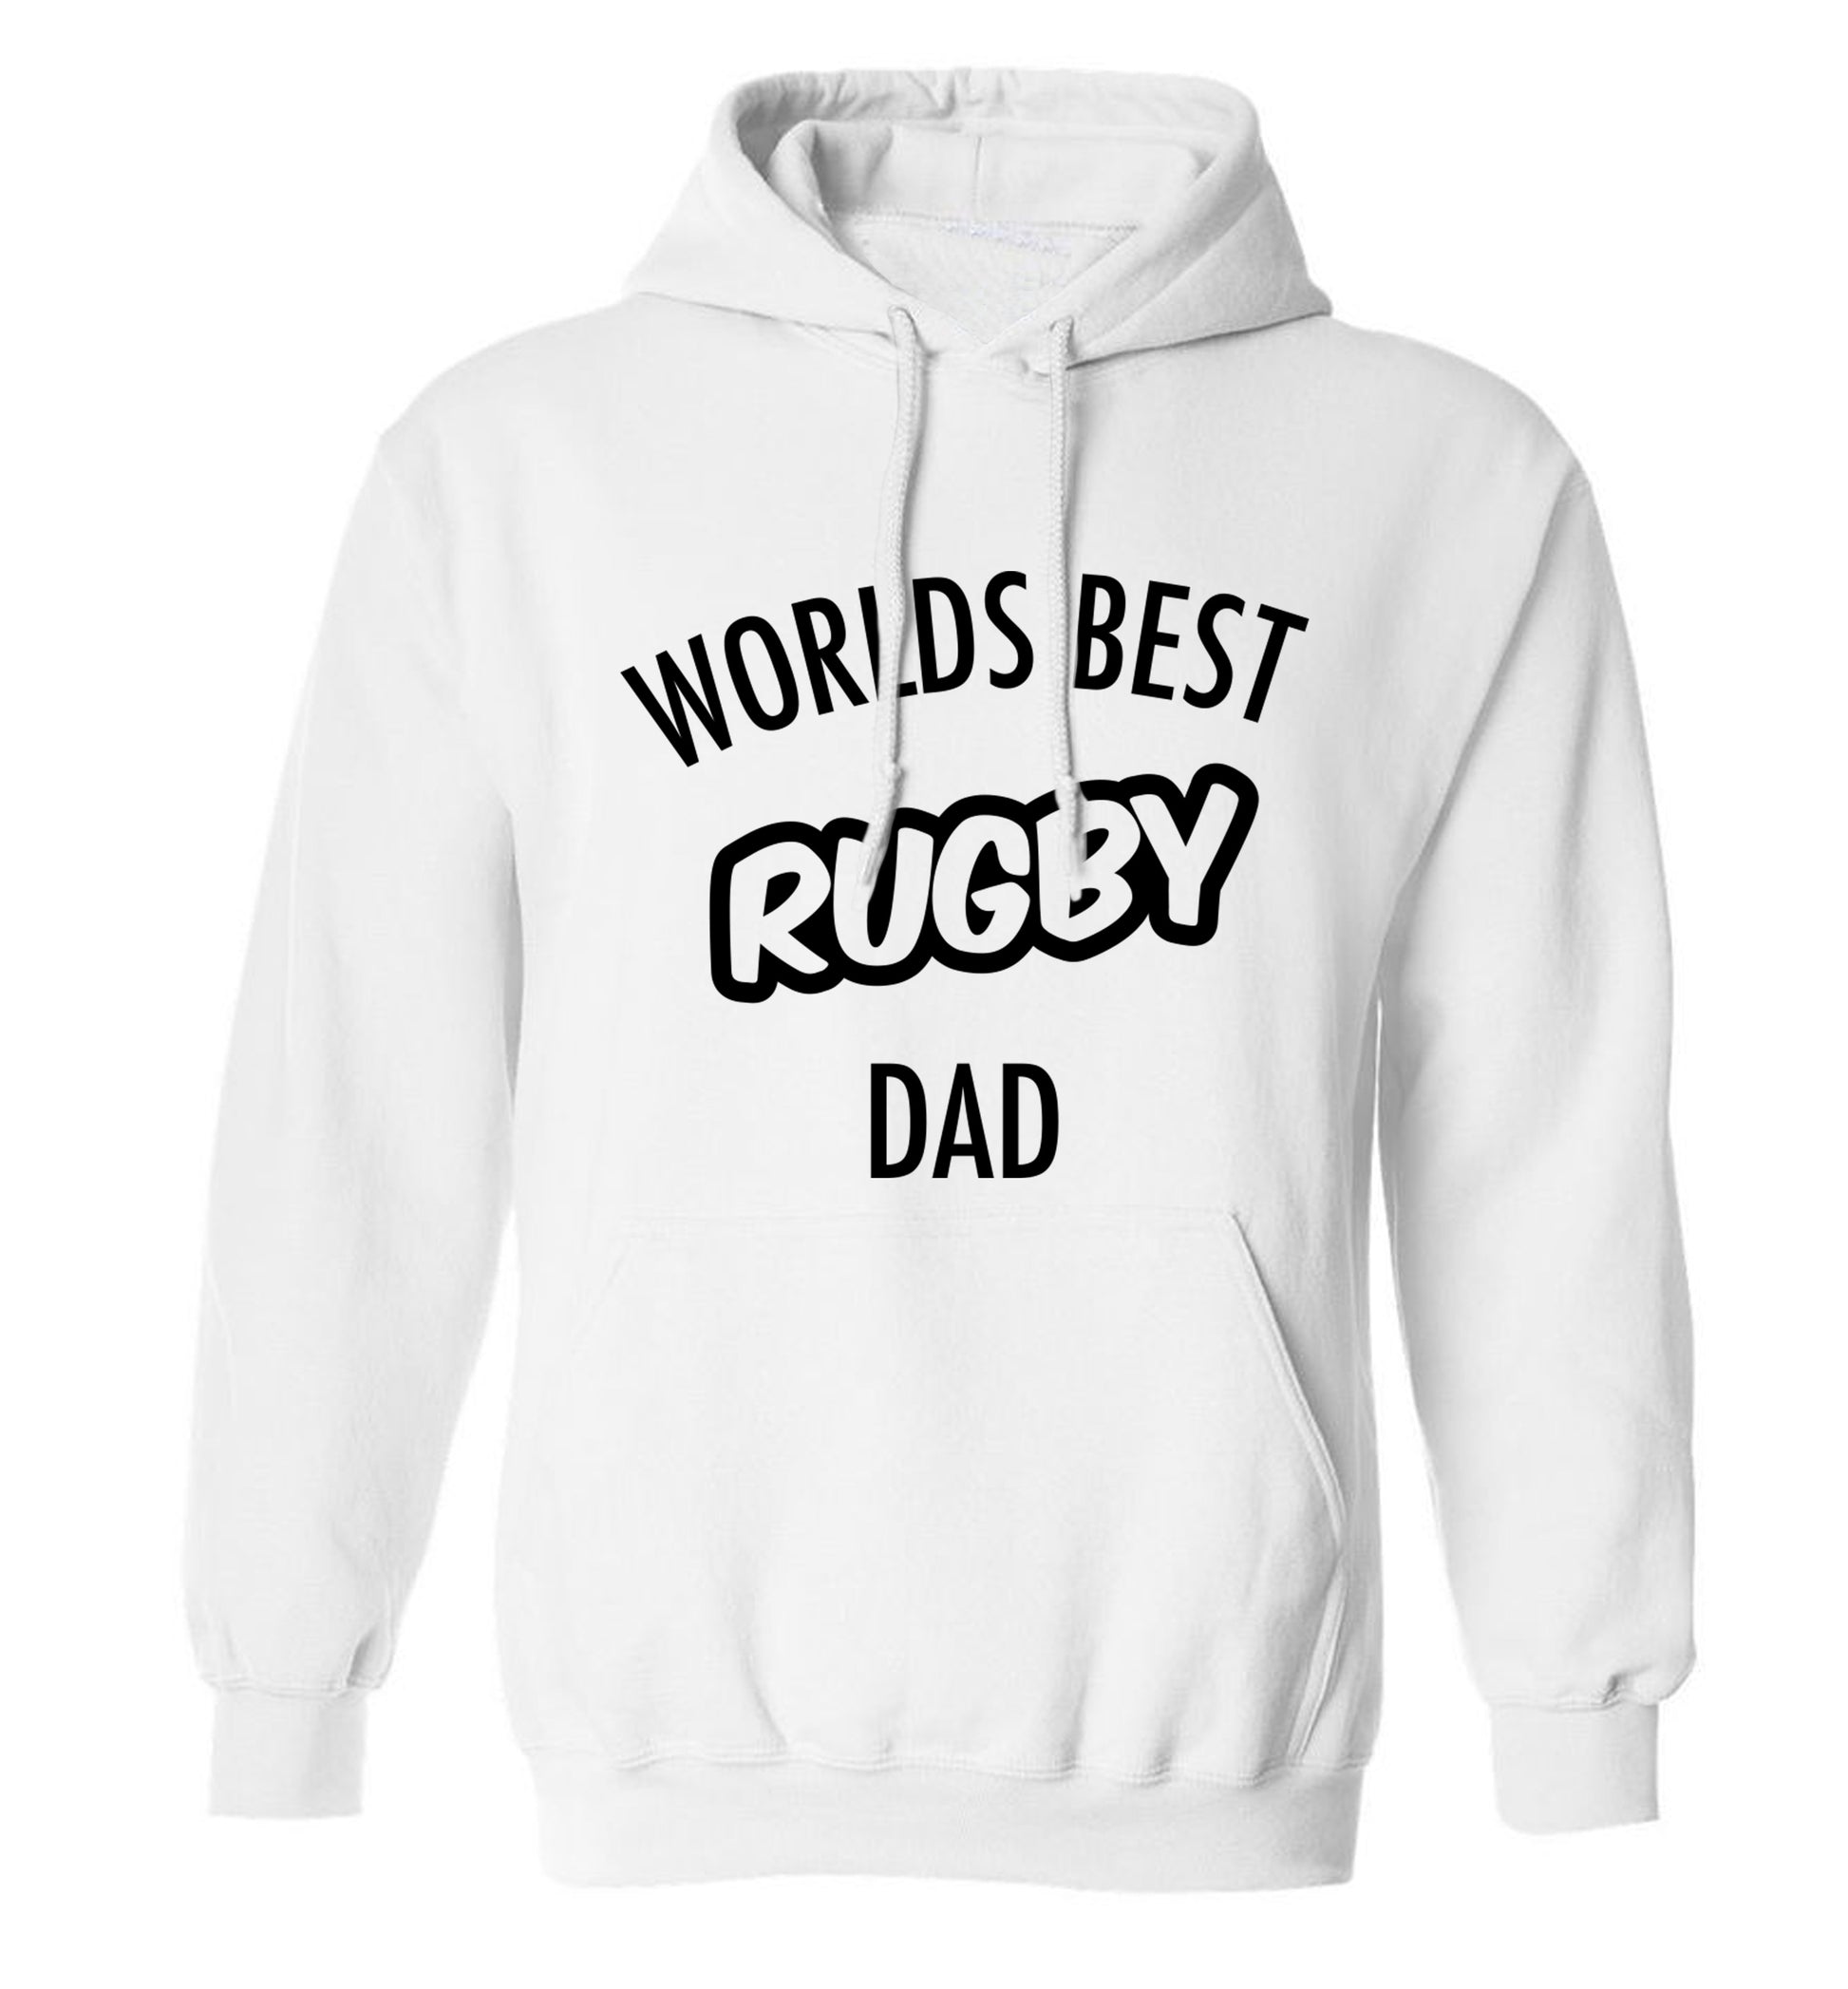 Worlds best rugby dad adults unisex white hoodie 2XL